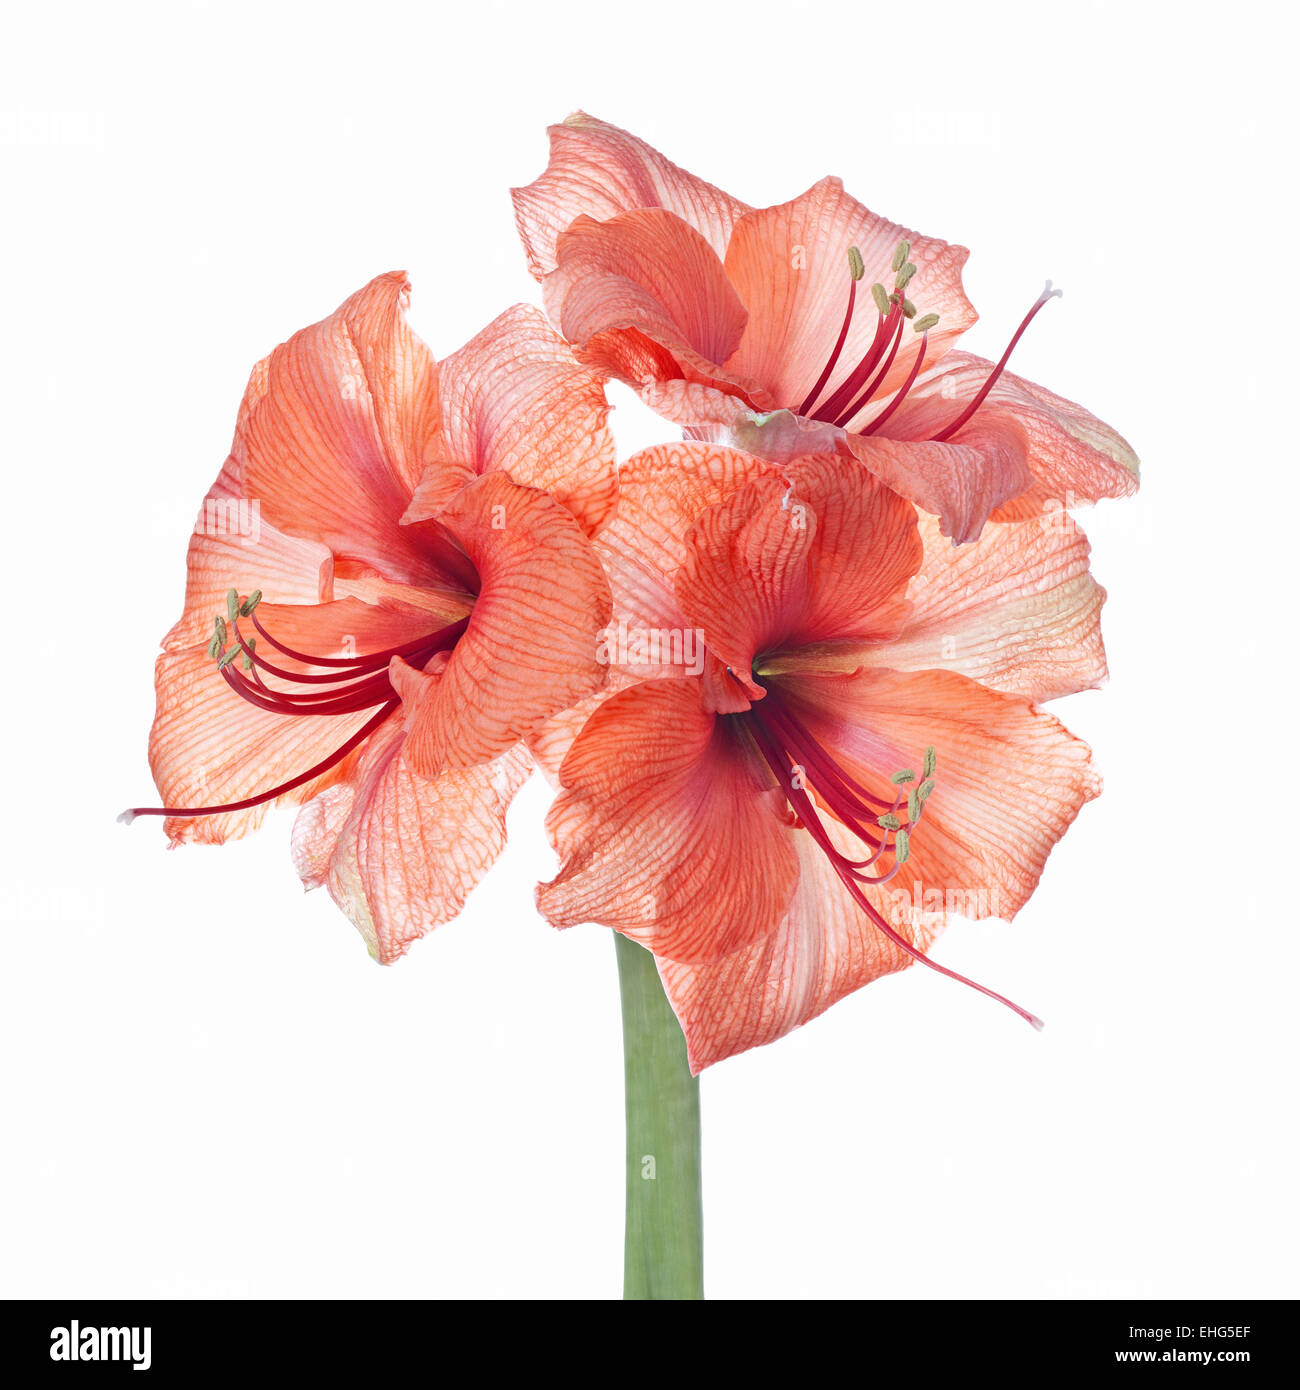 Amaryllis - Hippeastrum  flower head on white background Stock Photo